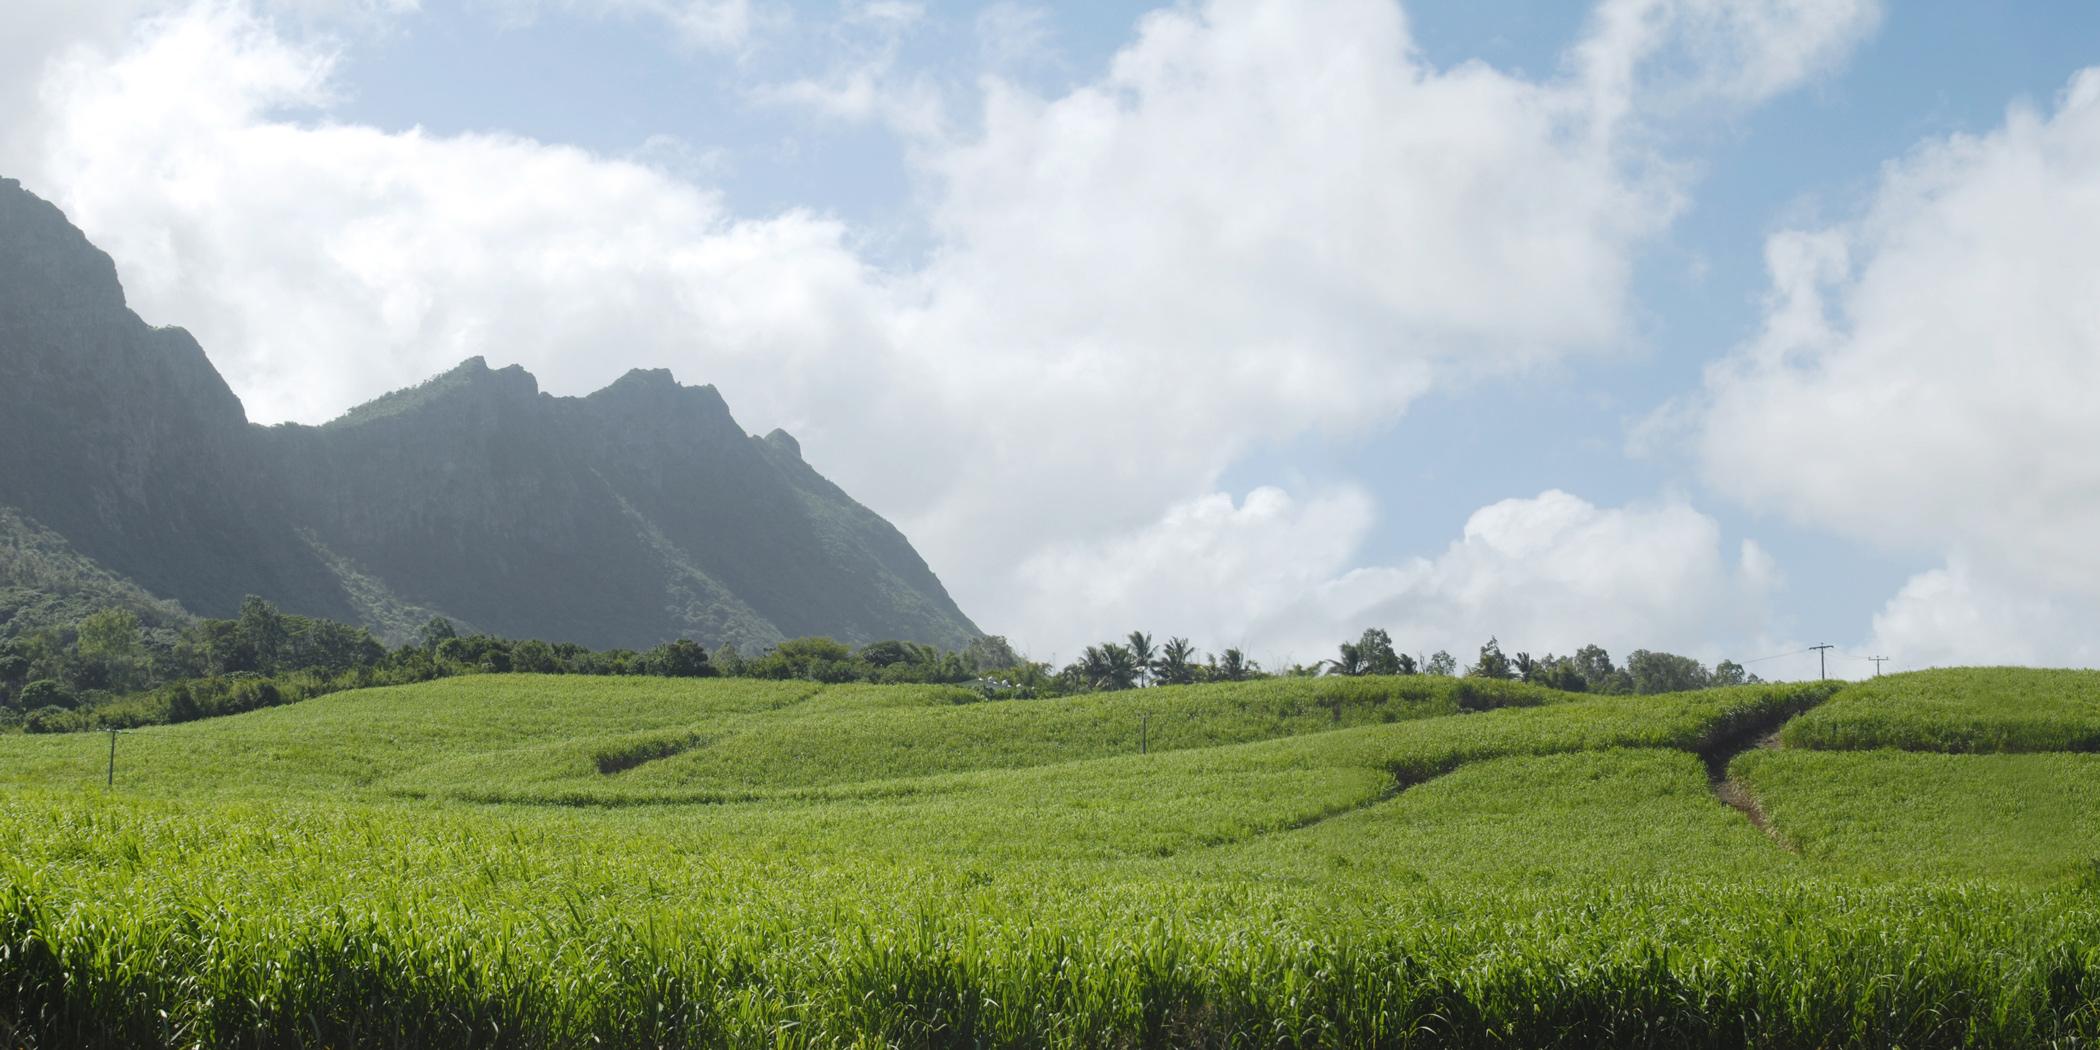 A sugarcane field.